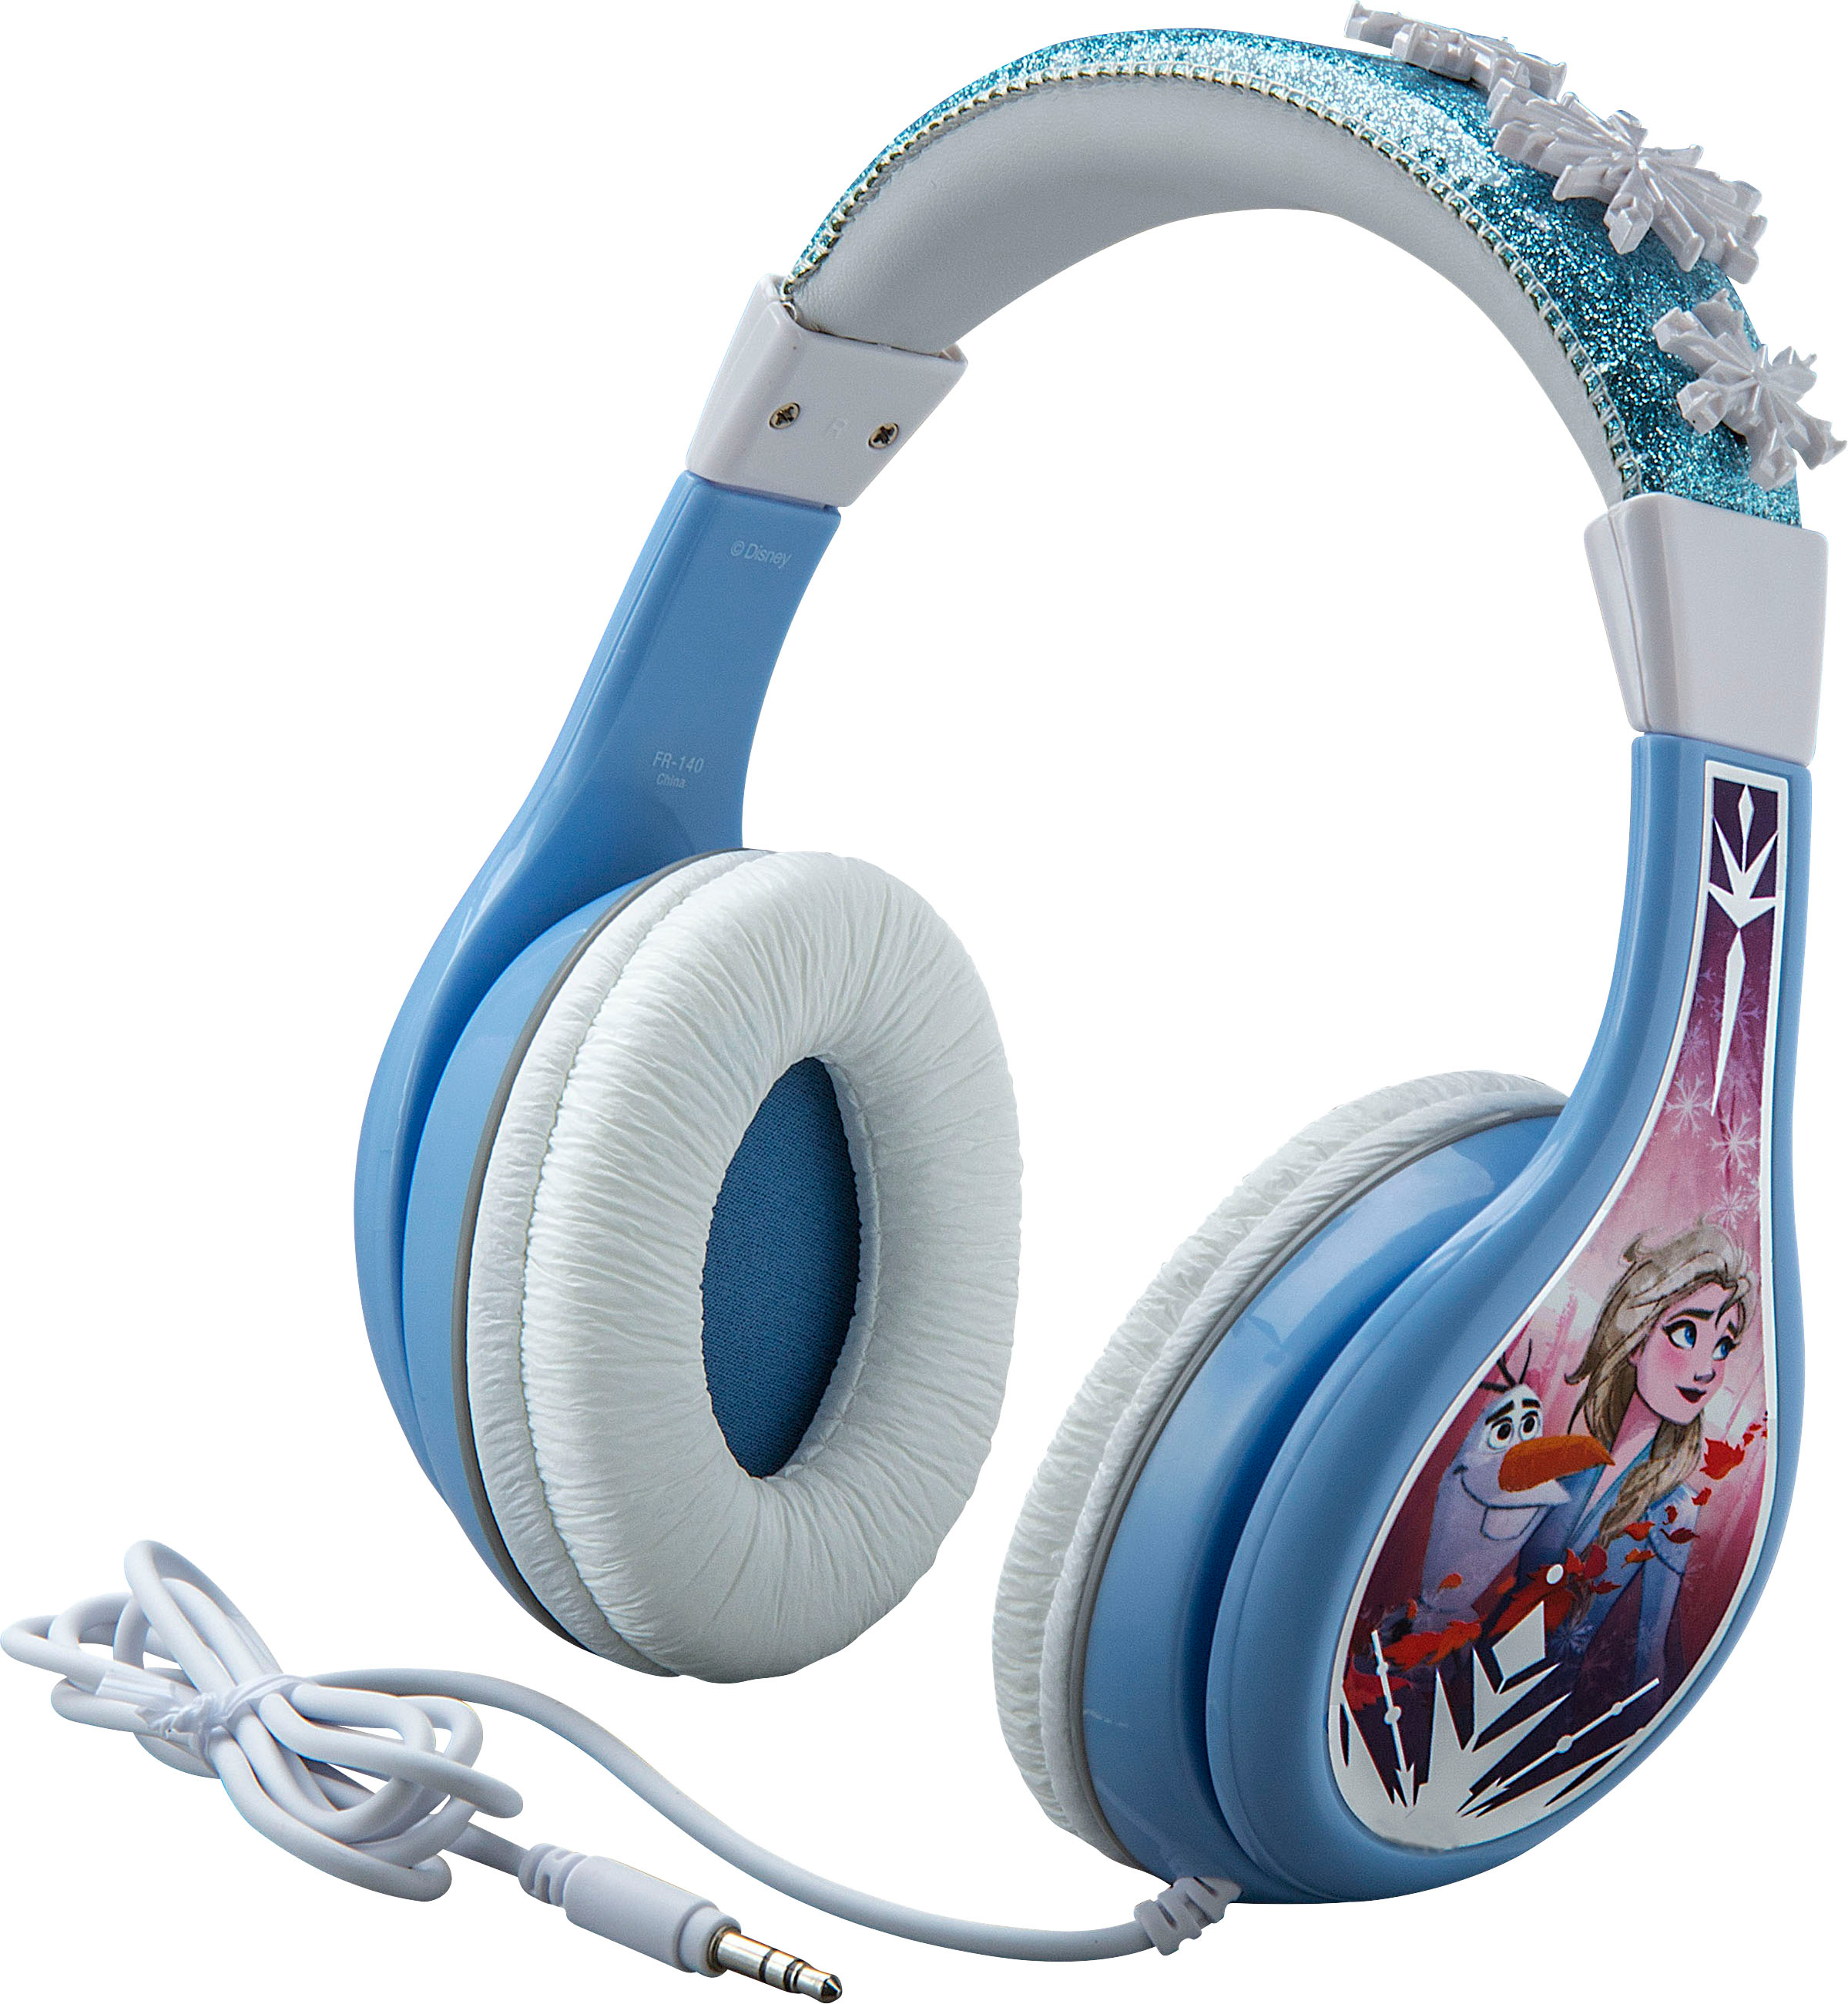 Angle View: eKids - Frozen II Wired Headphones - light blue